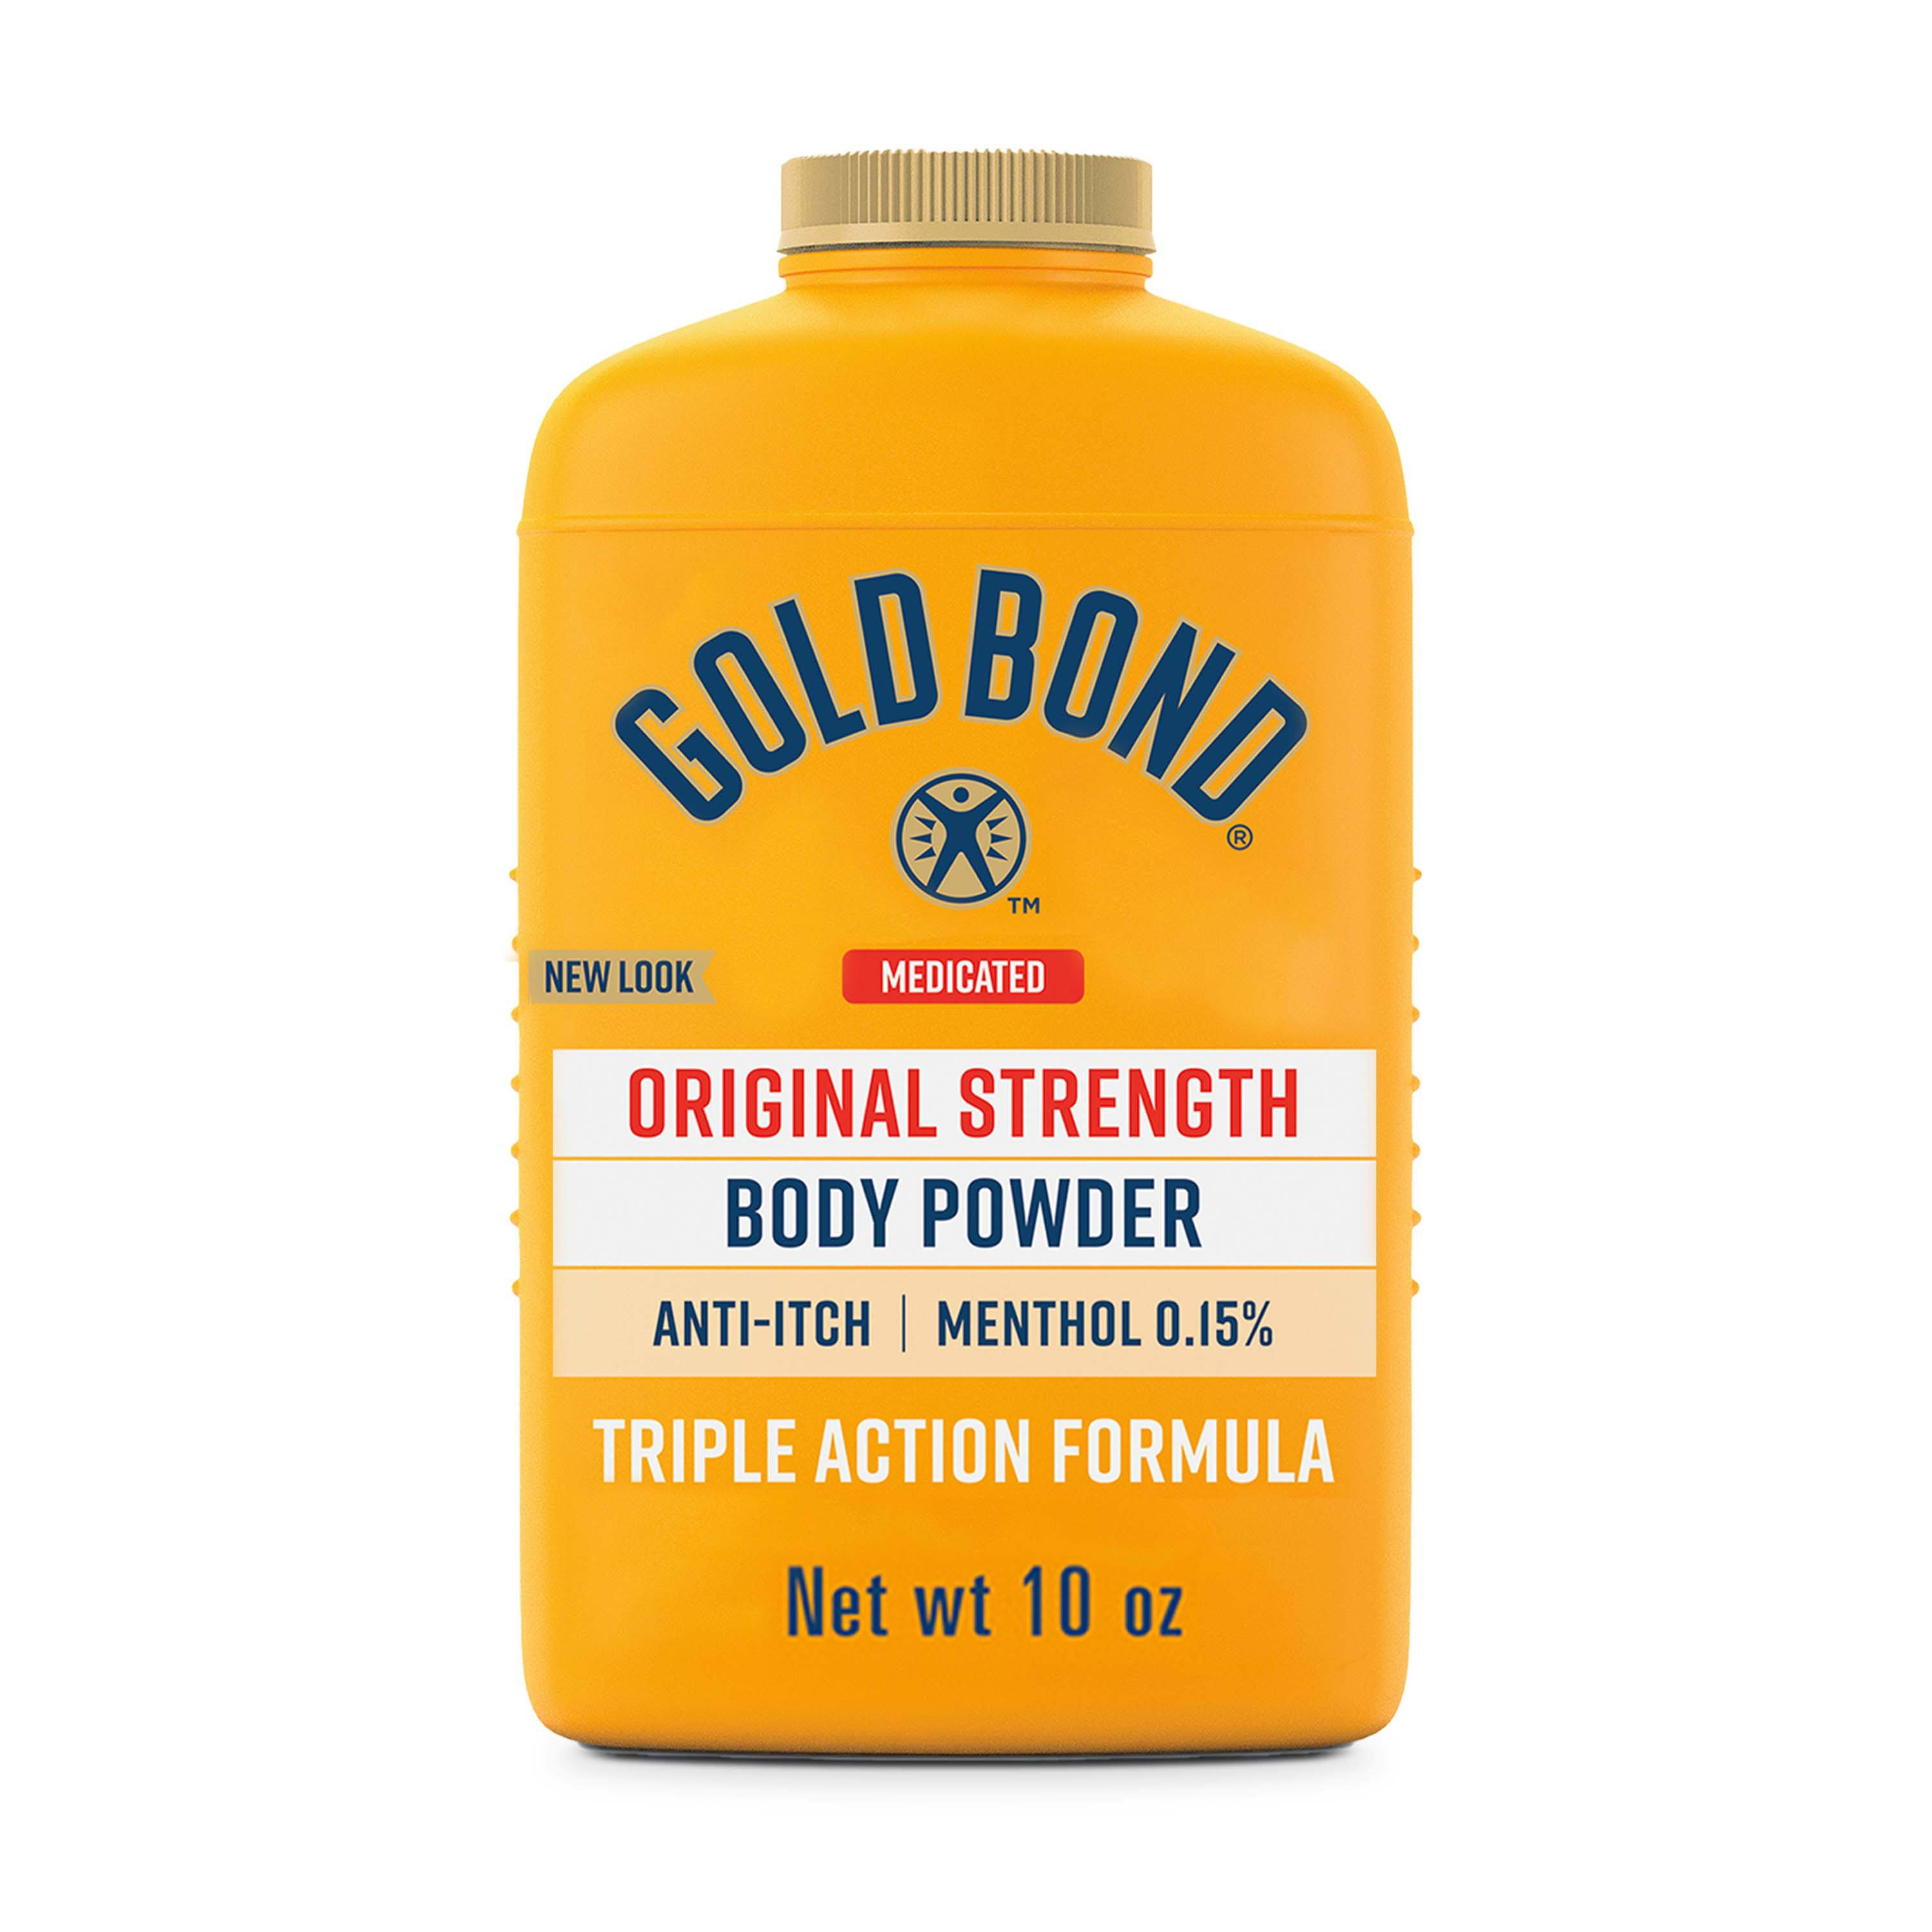 Gold bond medicated powder, 10 oz